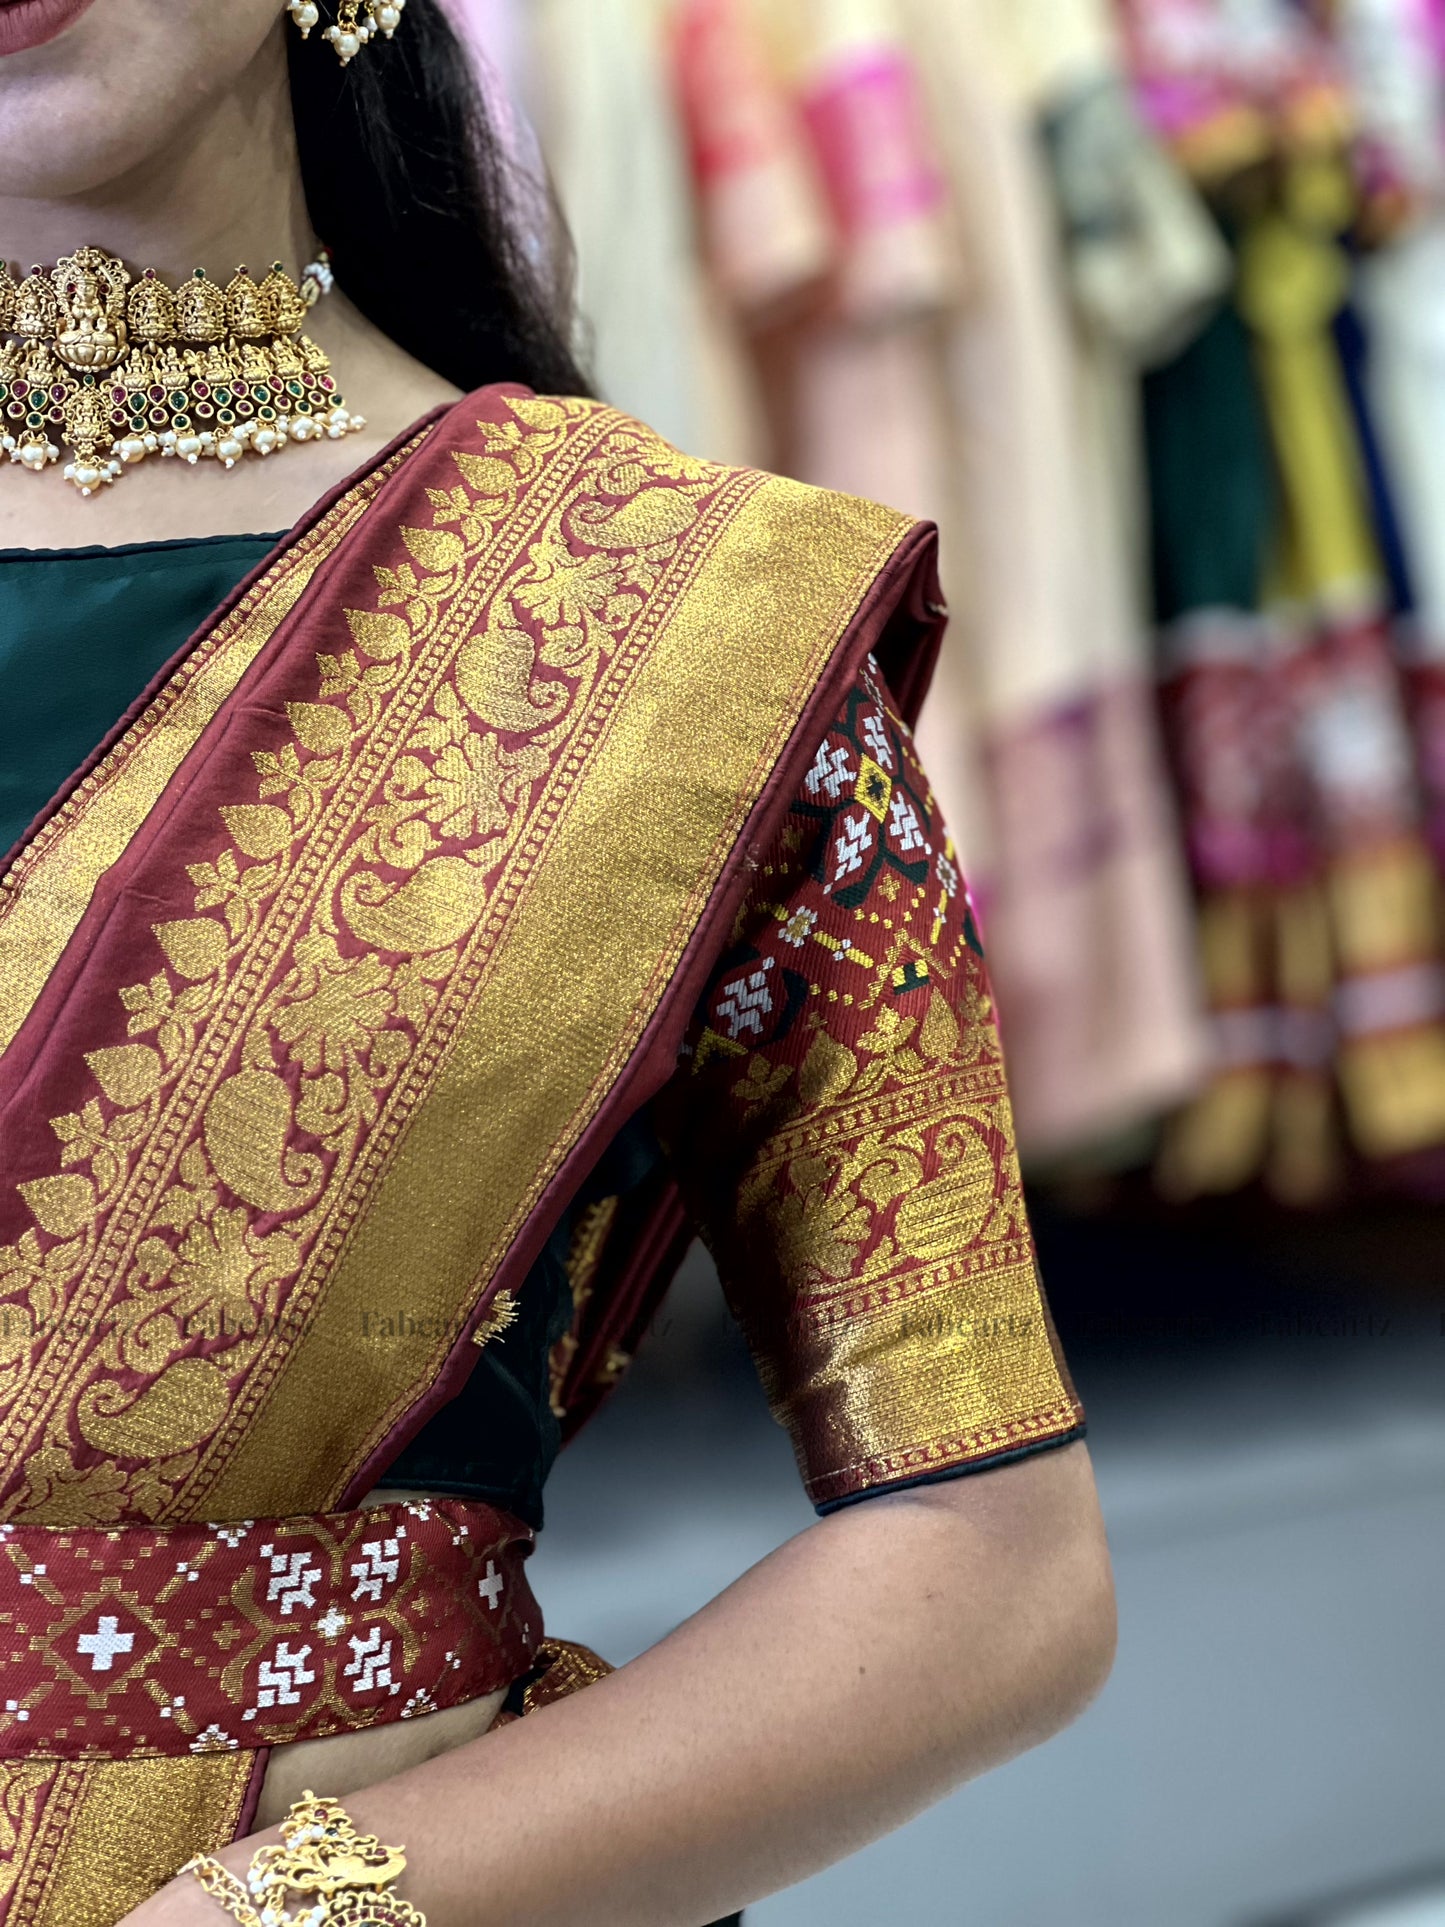 🌟 Enchanting South Indian Wedding Traditional Half Saree: Embrace the Splendor! 💍💃